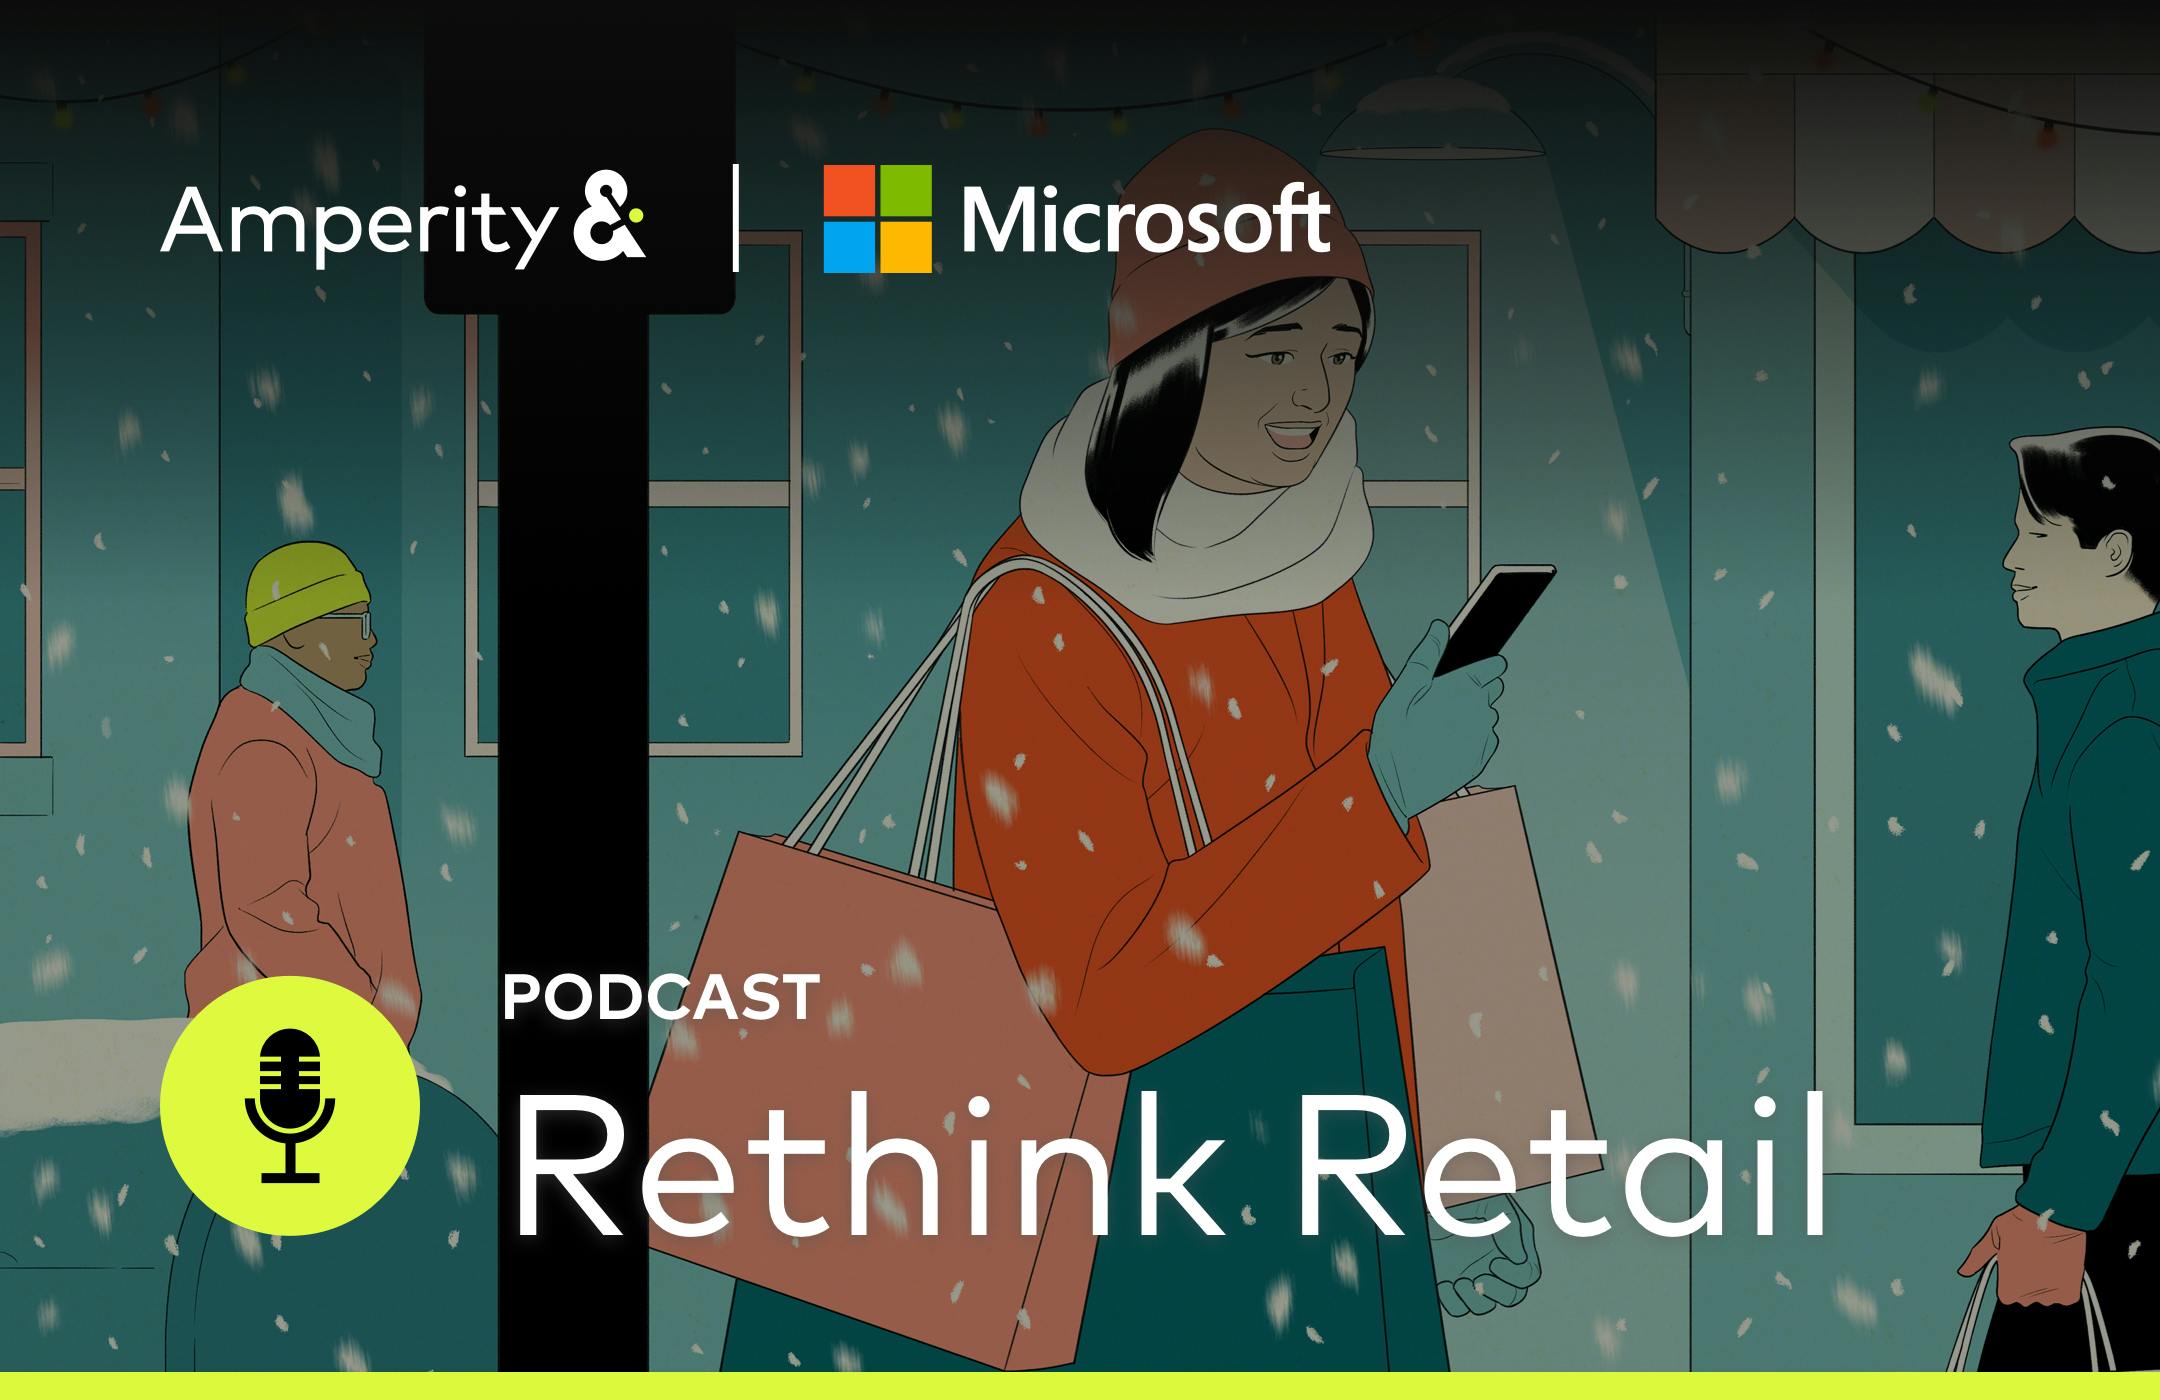 Amperity & Microsoft podcast: Rethink Retail